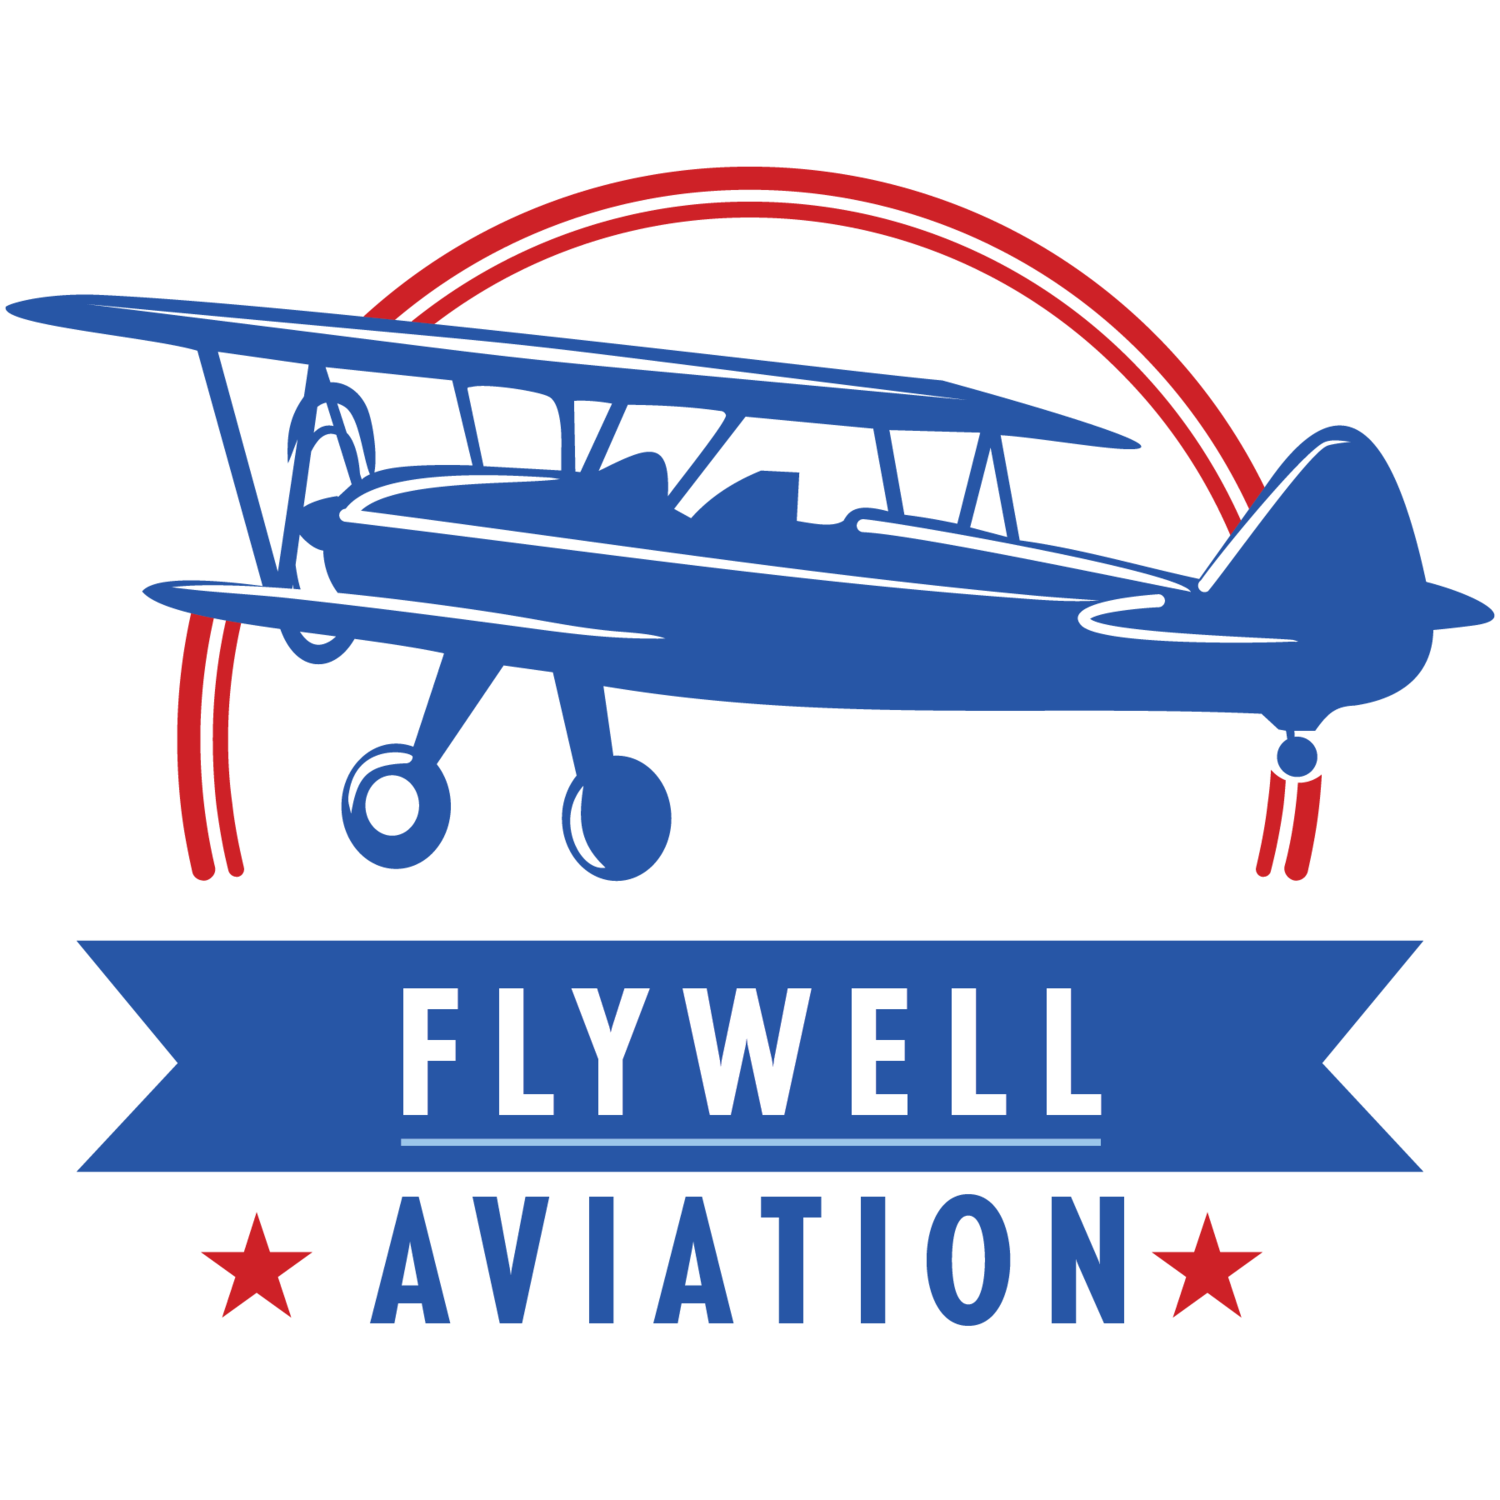 Flywell Aviation